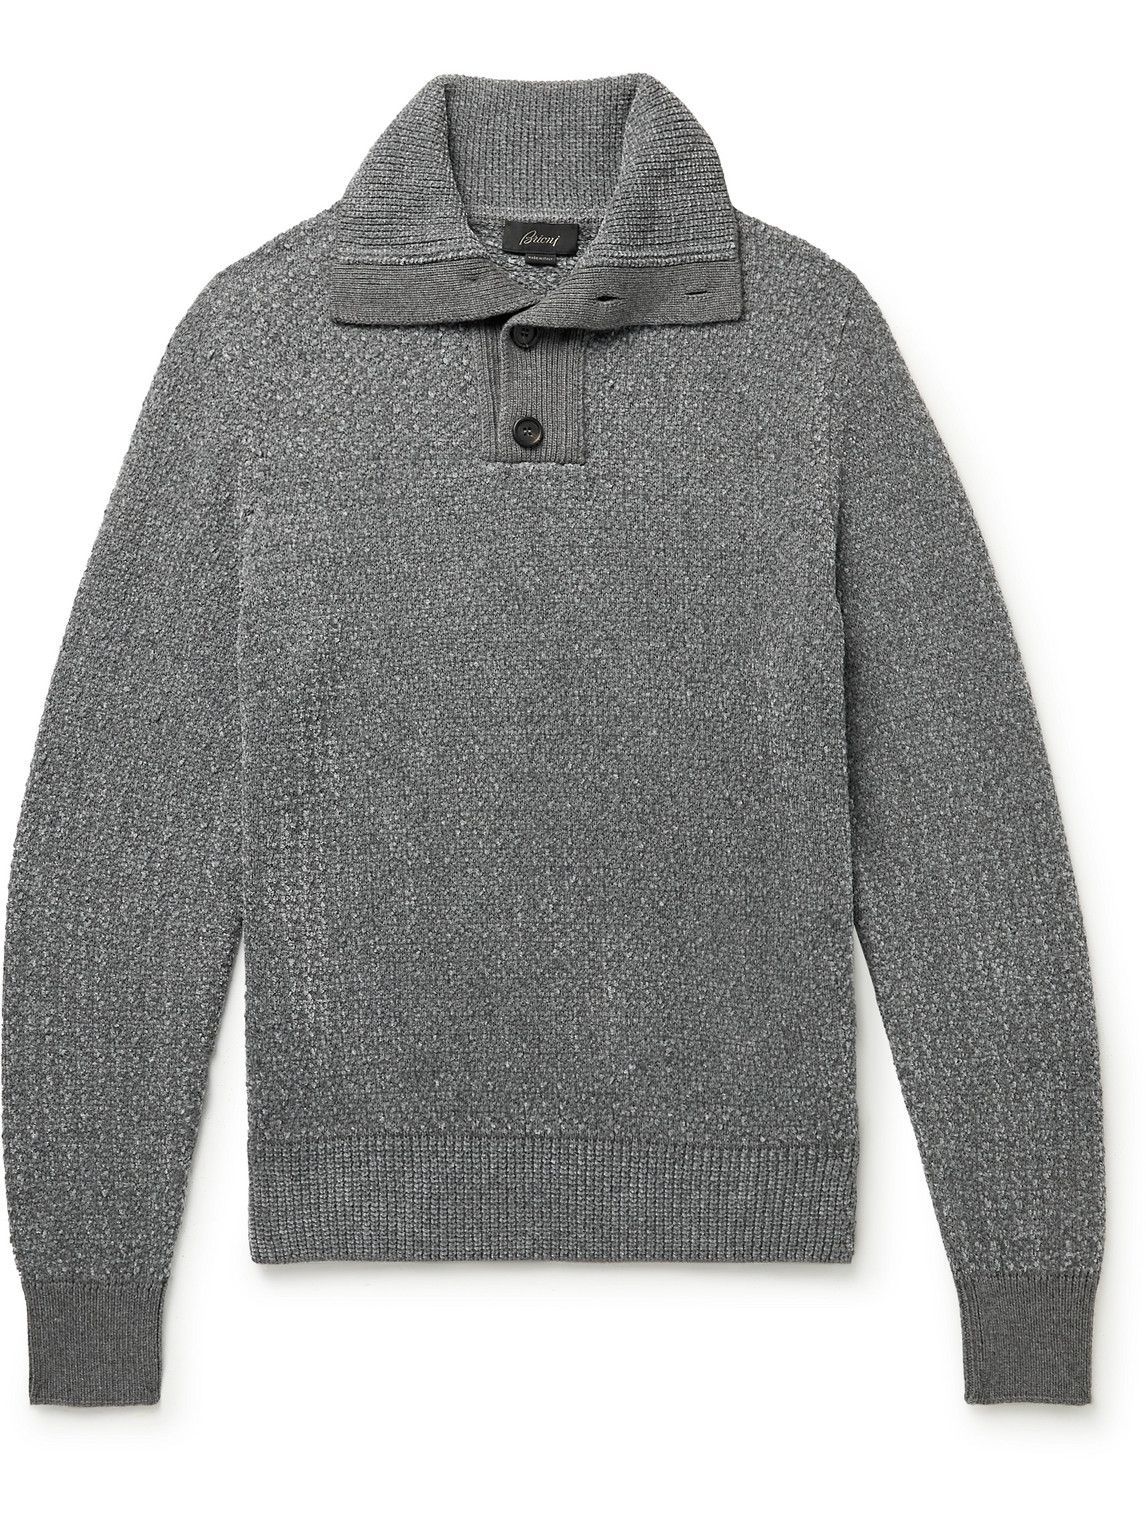 Brioni - Silk, Wool and Cashmere-Blend Sweater - Gray Brioni